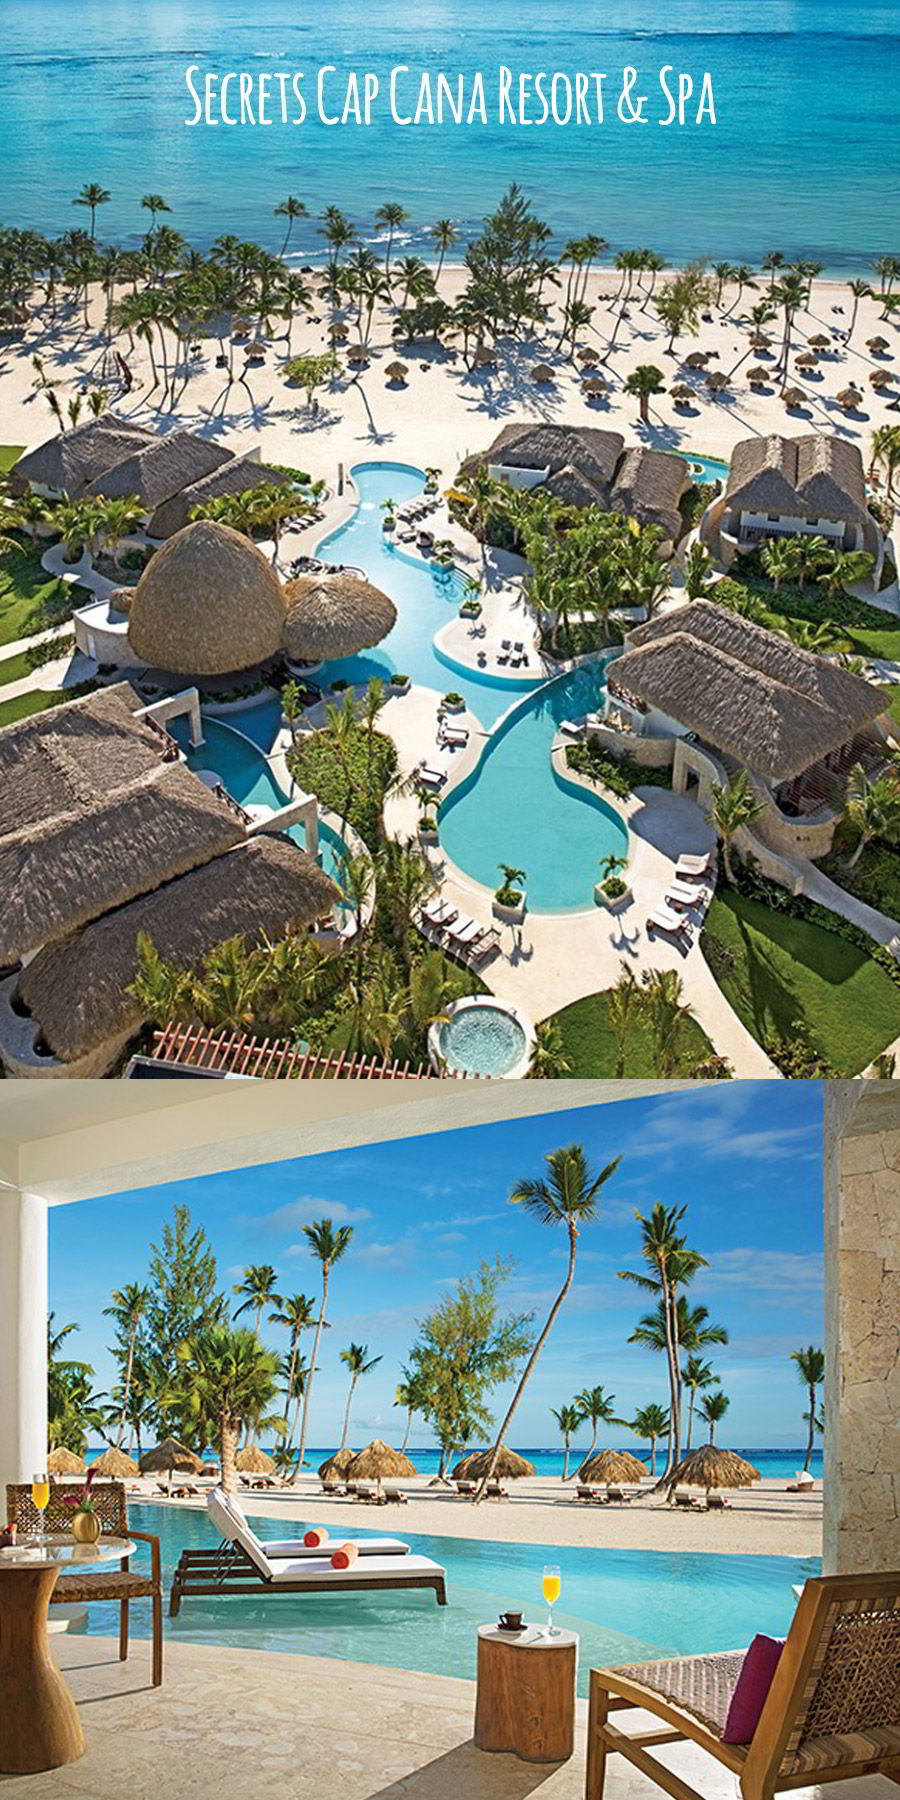 secrets resorts cap cana resort spa dominican republic destination wedding venue luxury honeymoon aerial view bungalow pool